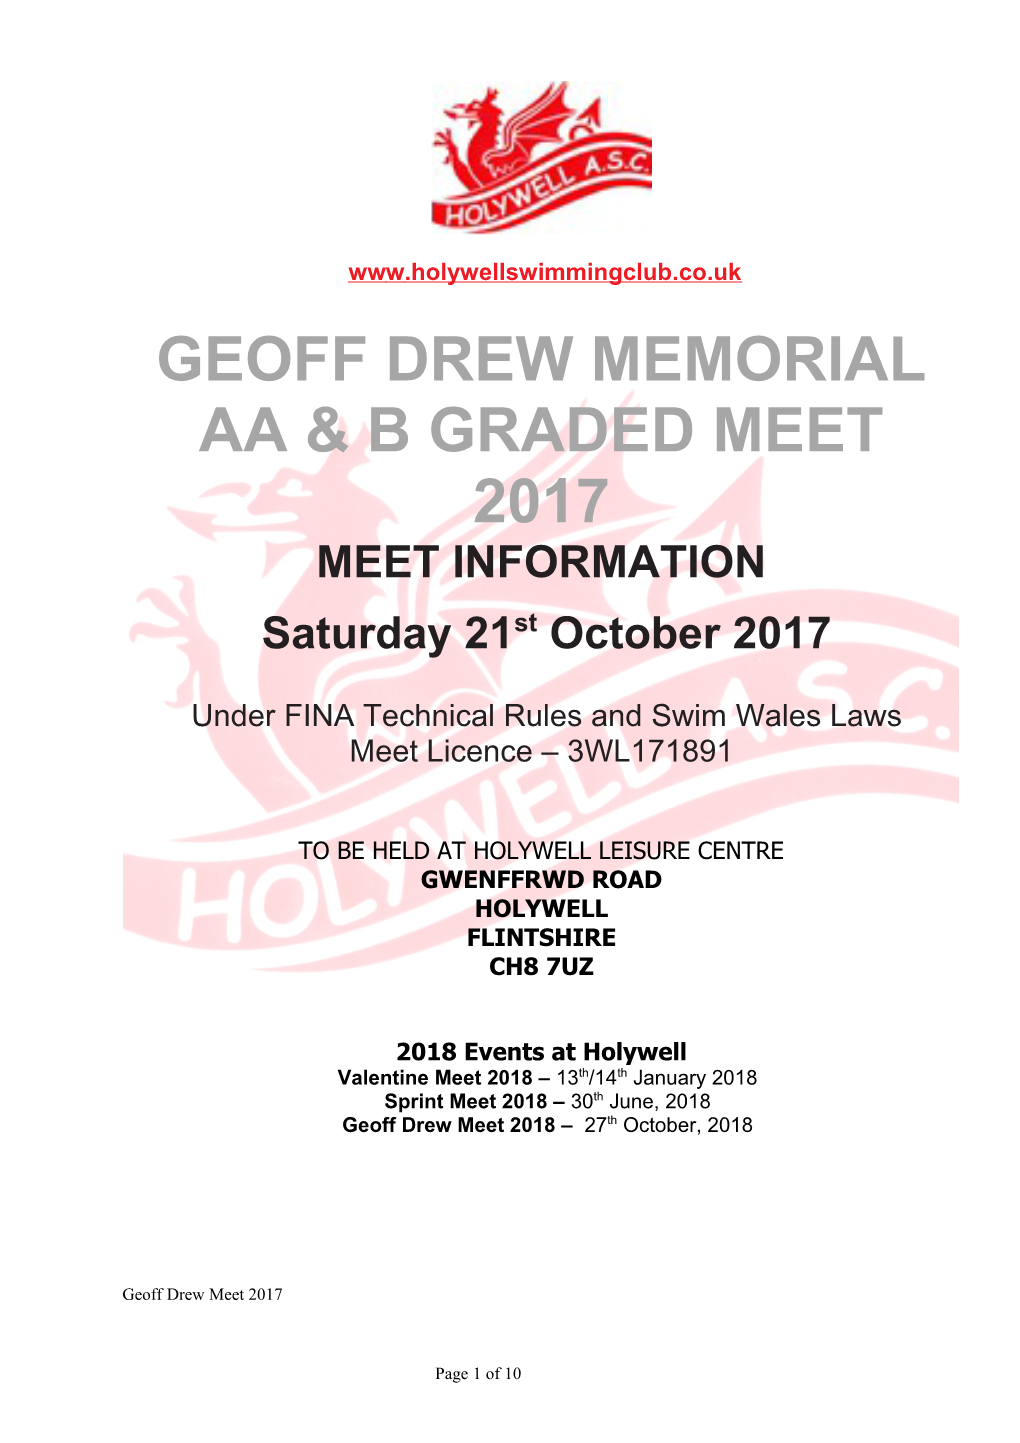 Geoff Drew Memorial Aa & B Graded Meet